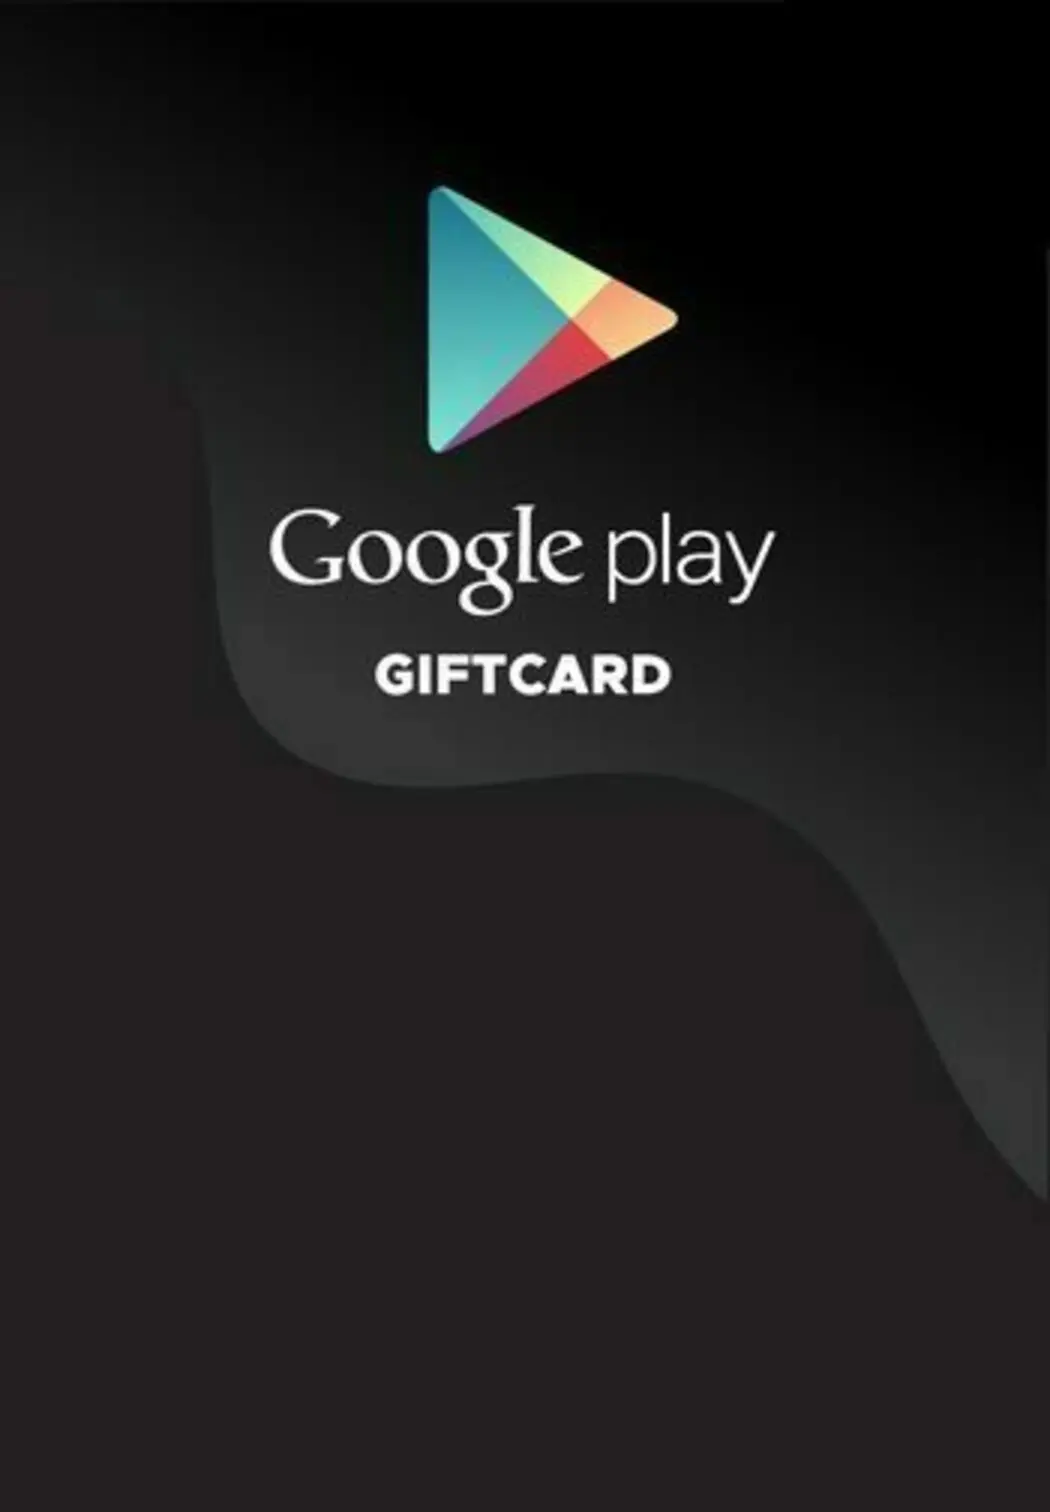 Google Play €40 EUR Gift Card (IT) - Digital Code